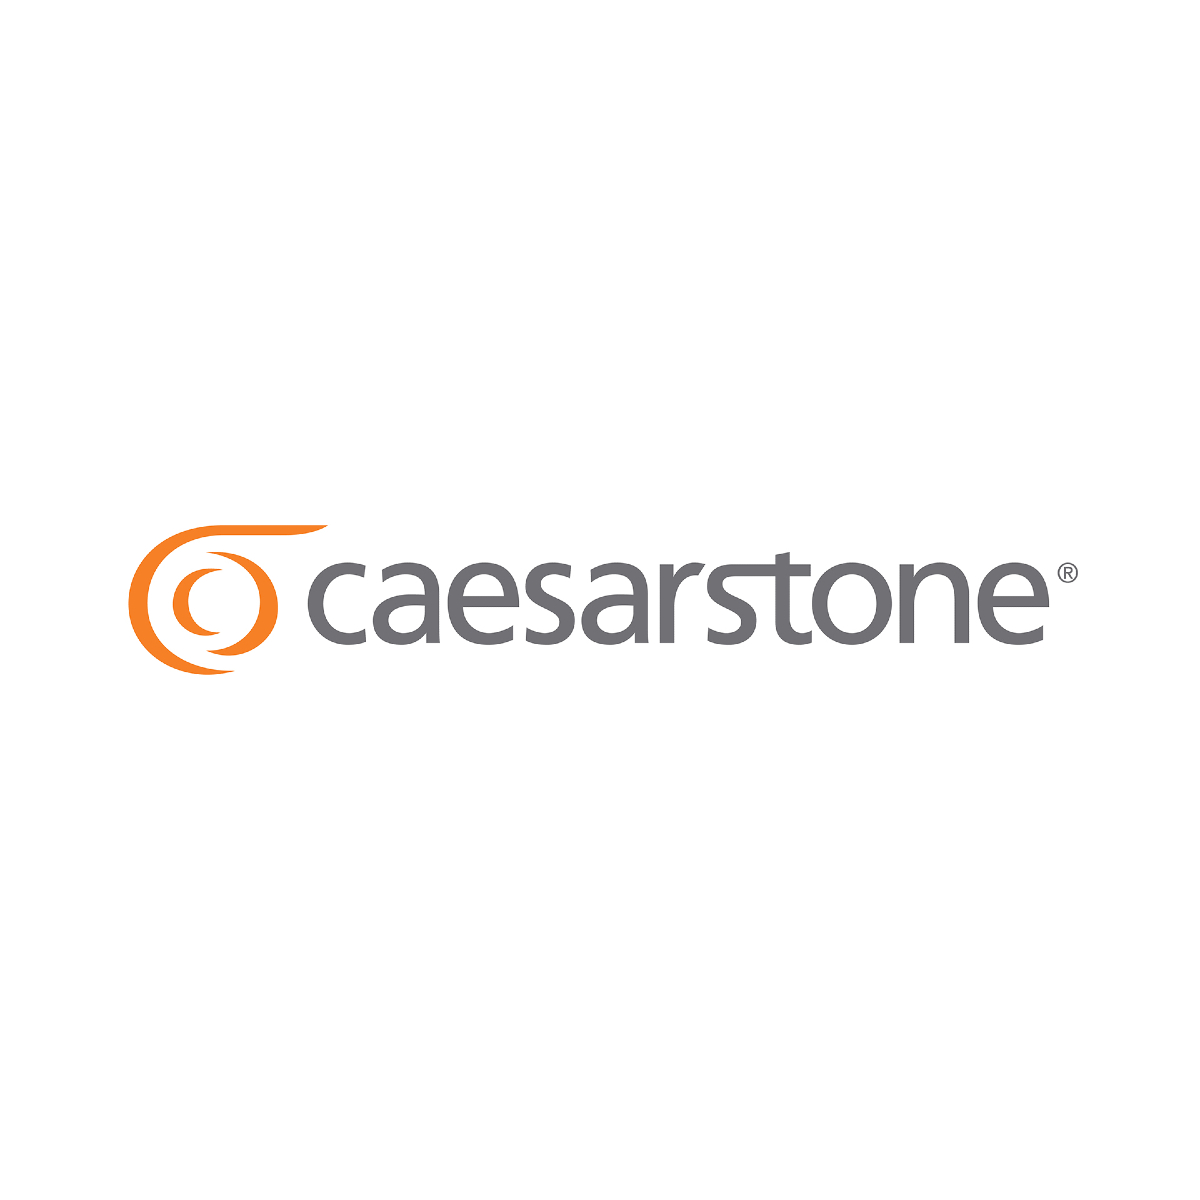 Caesarstone logo full color 1